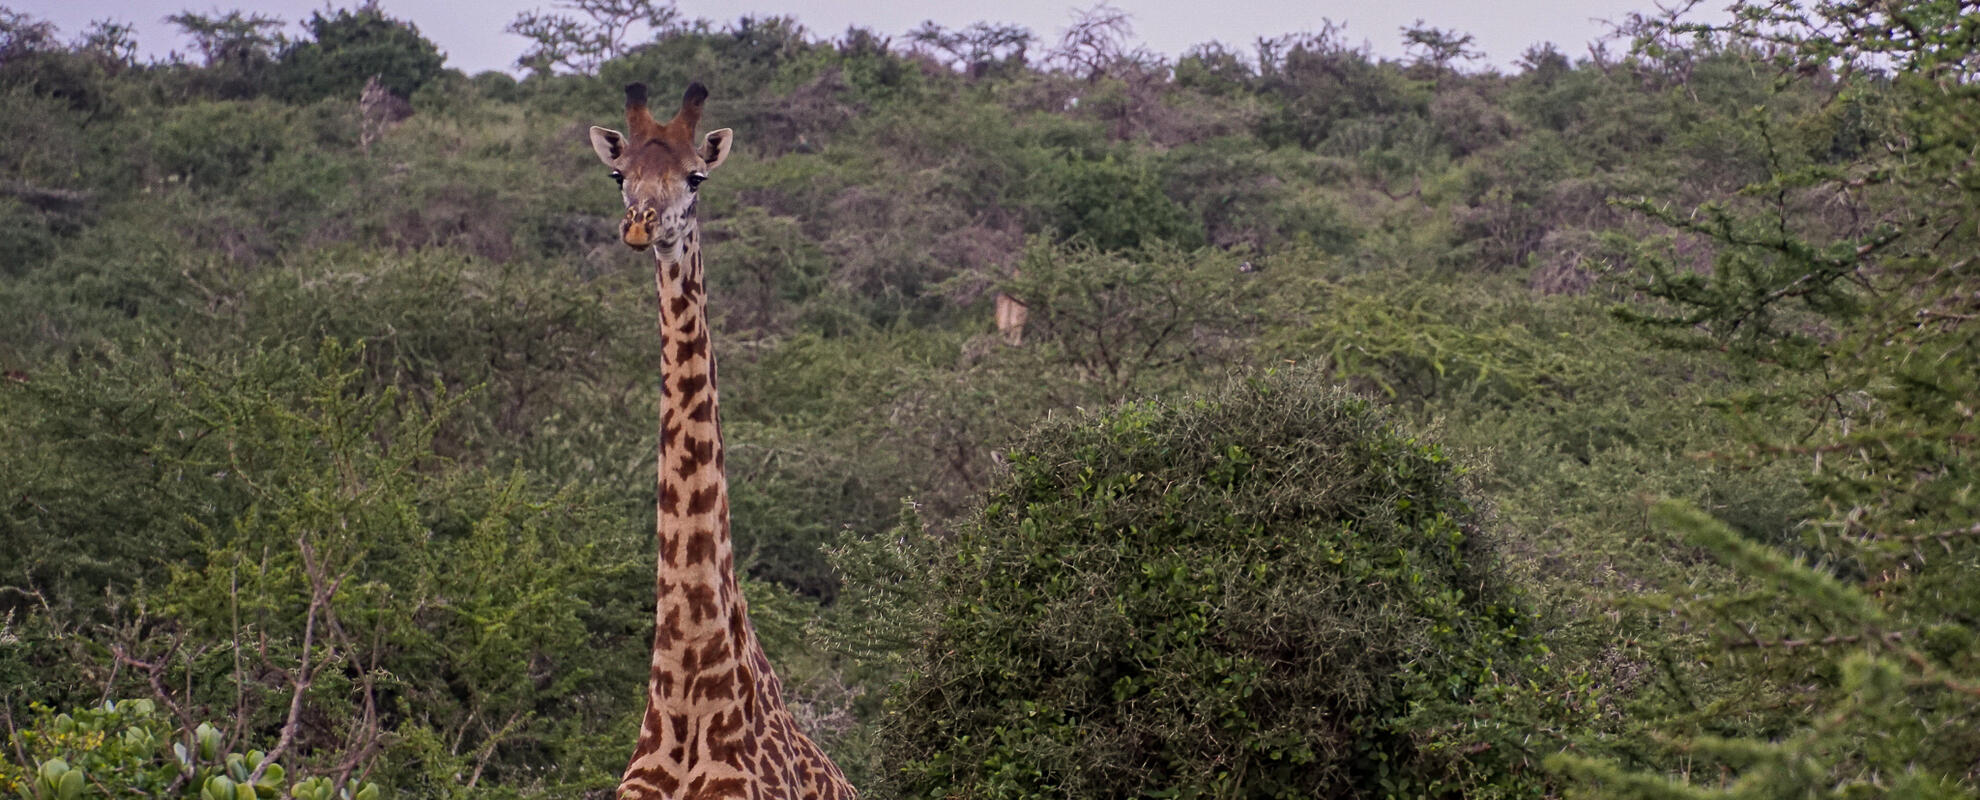 Giraffe in ILRI Kapiti ranch